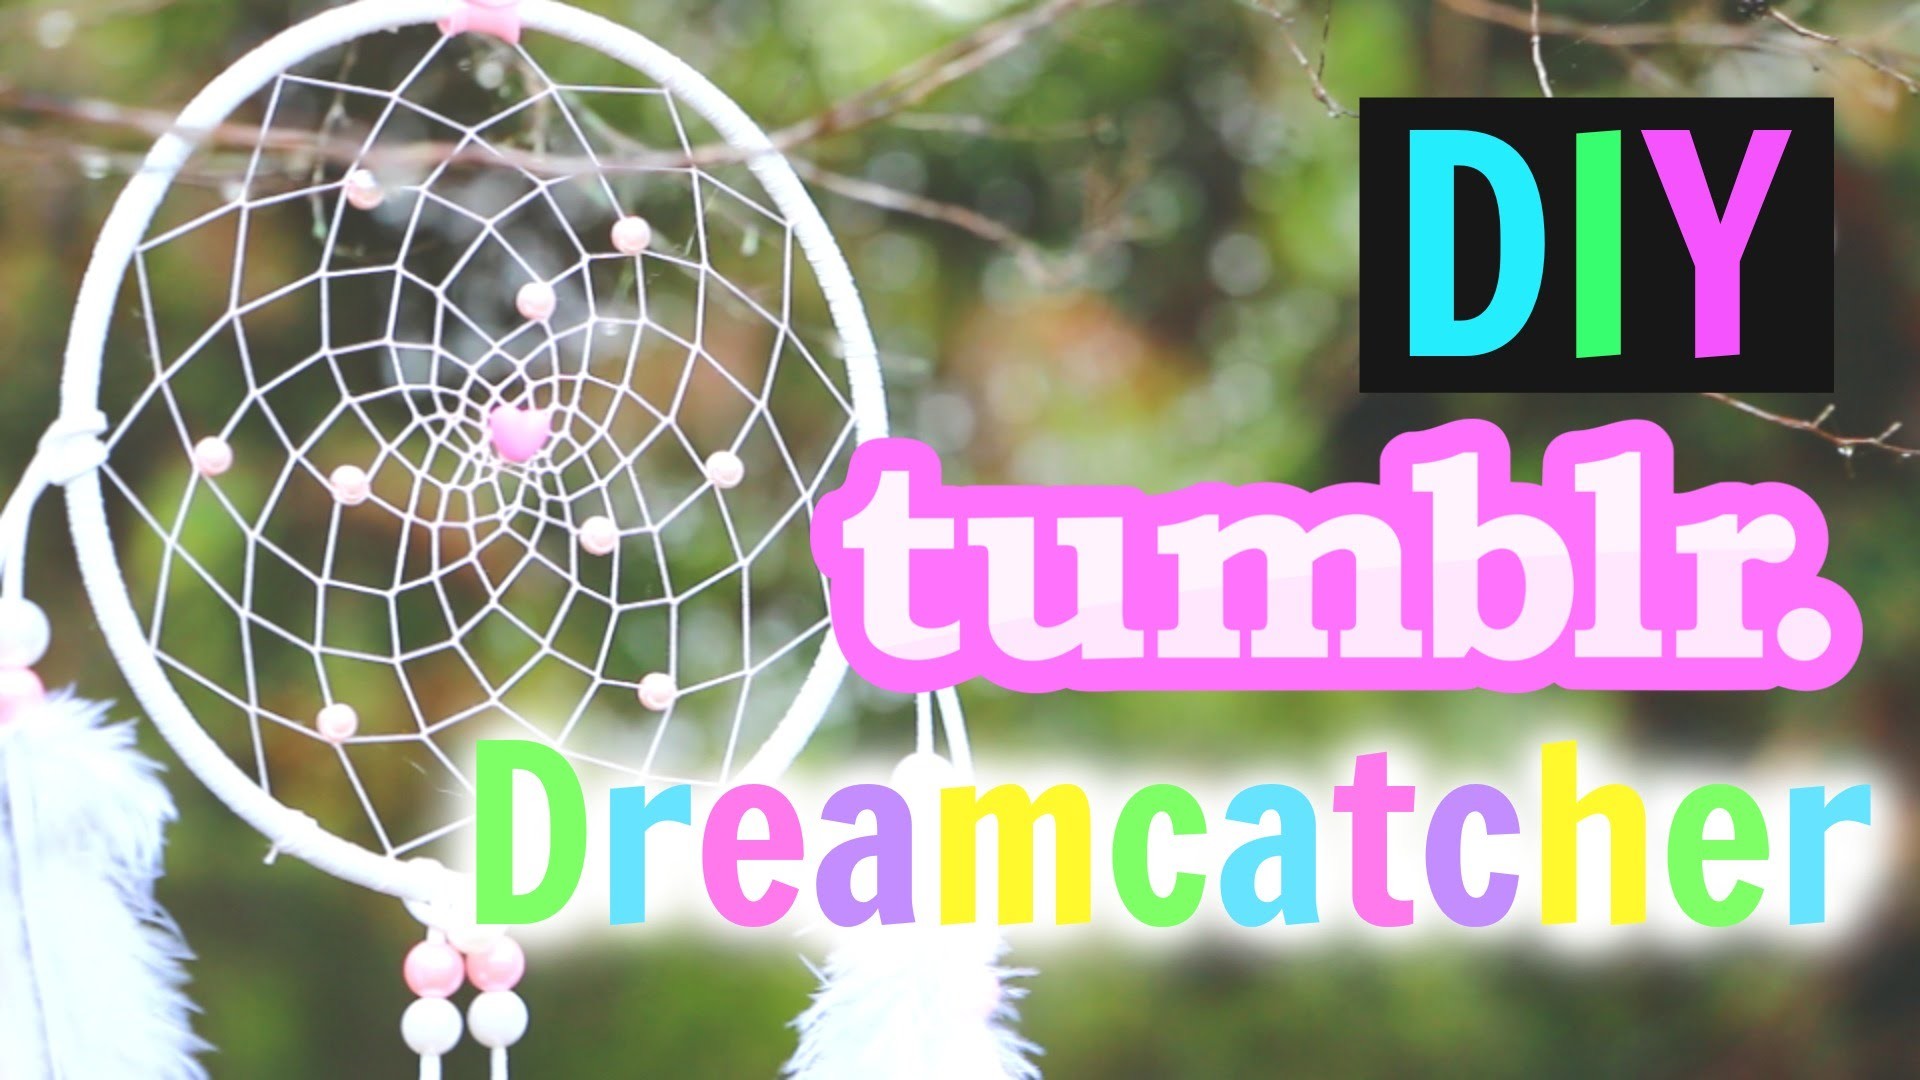 1920x1080 DIY Tumblr Dreamcatcher Tutorial! How To Make A Dreamcatcher! - YouTube